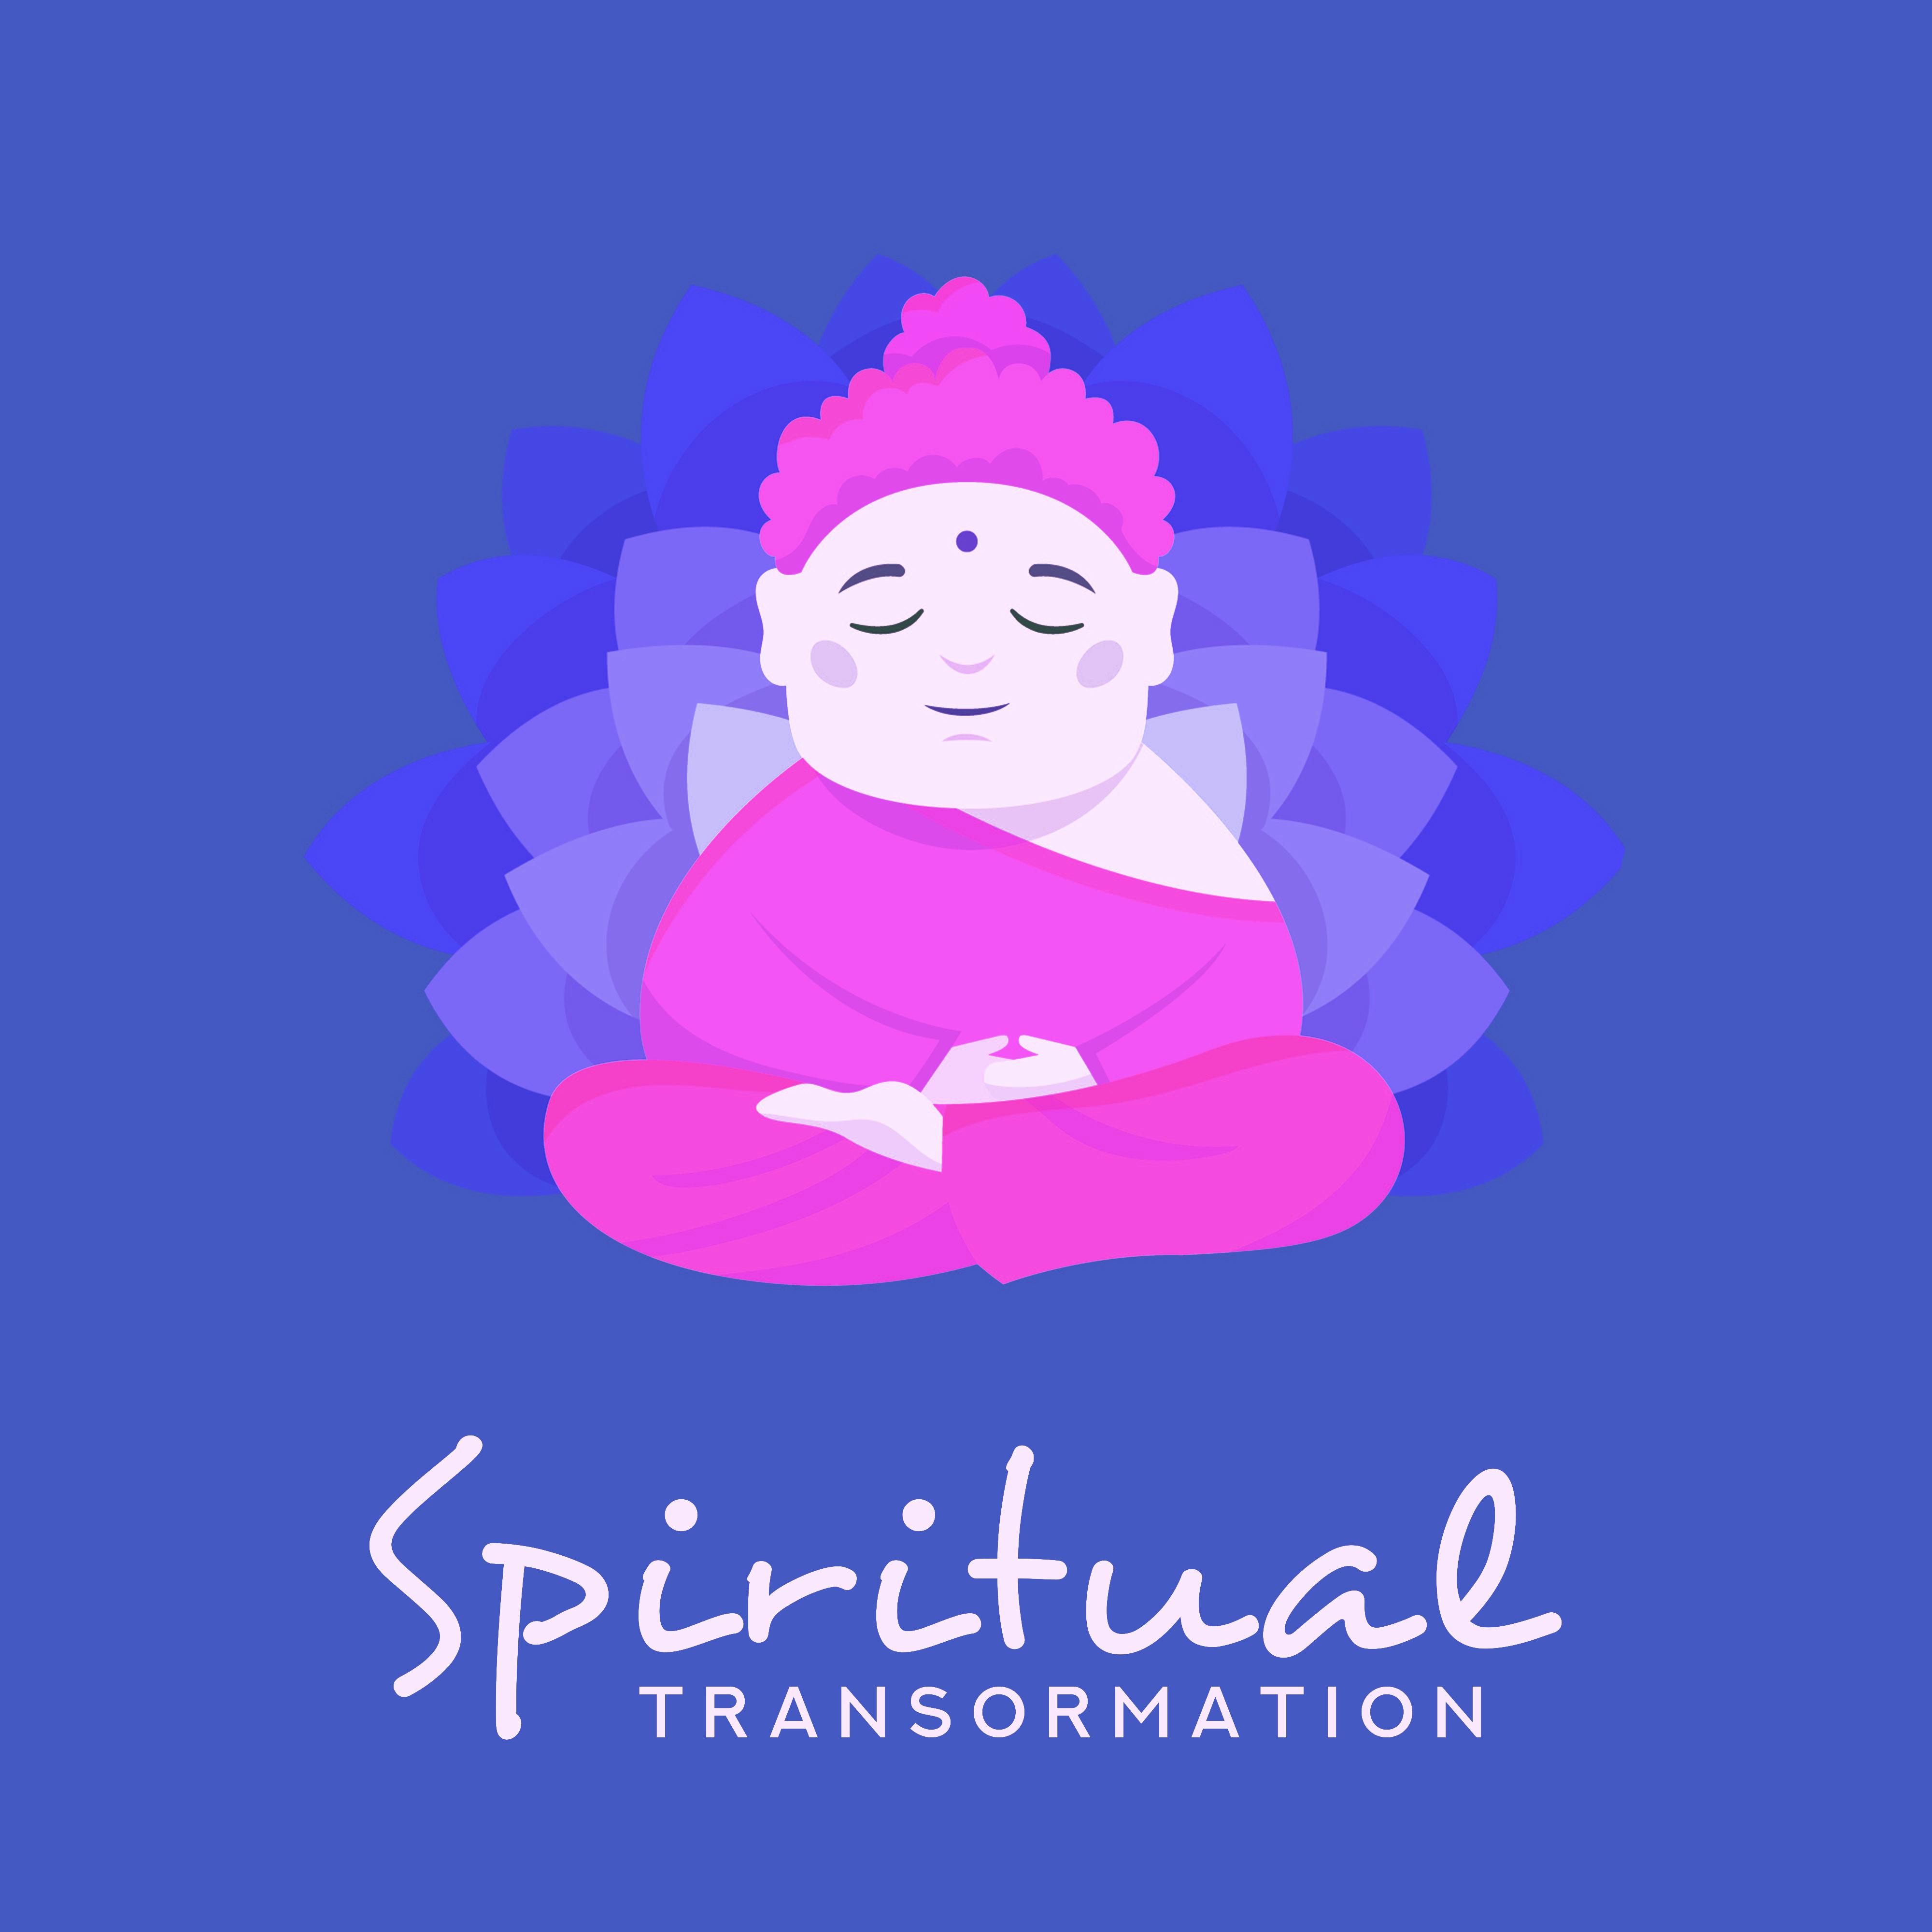 Spiritual Transormation: Meditation Music to Balance the Chakras, Awaken Spiritual Power, Exercise Mindfulness and Healing